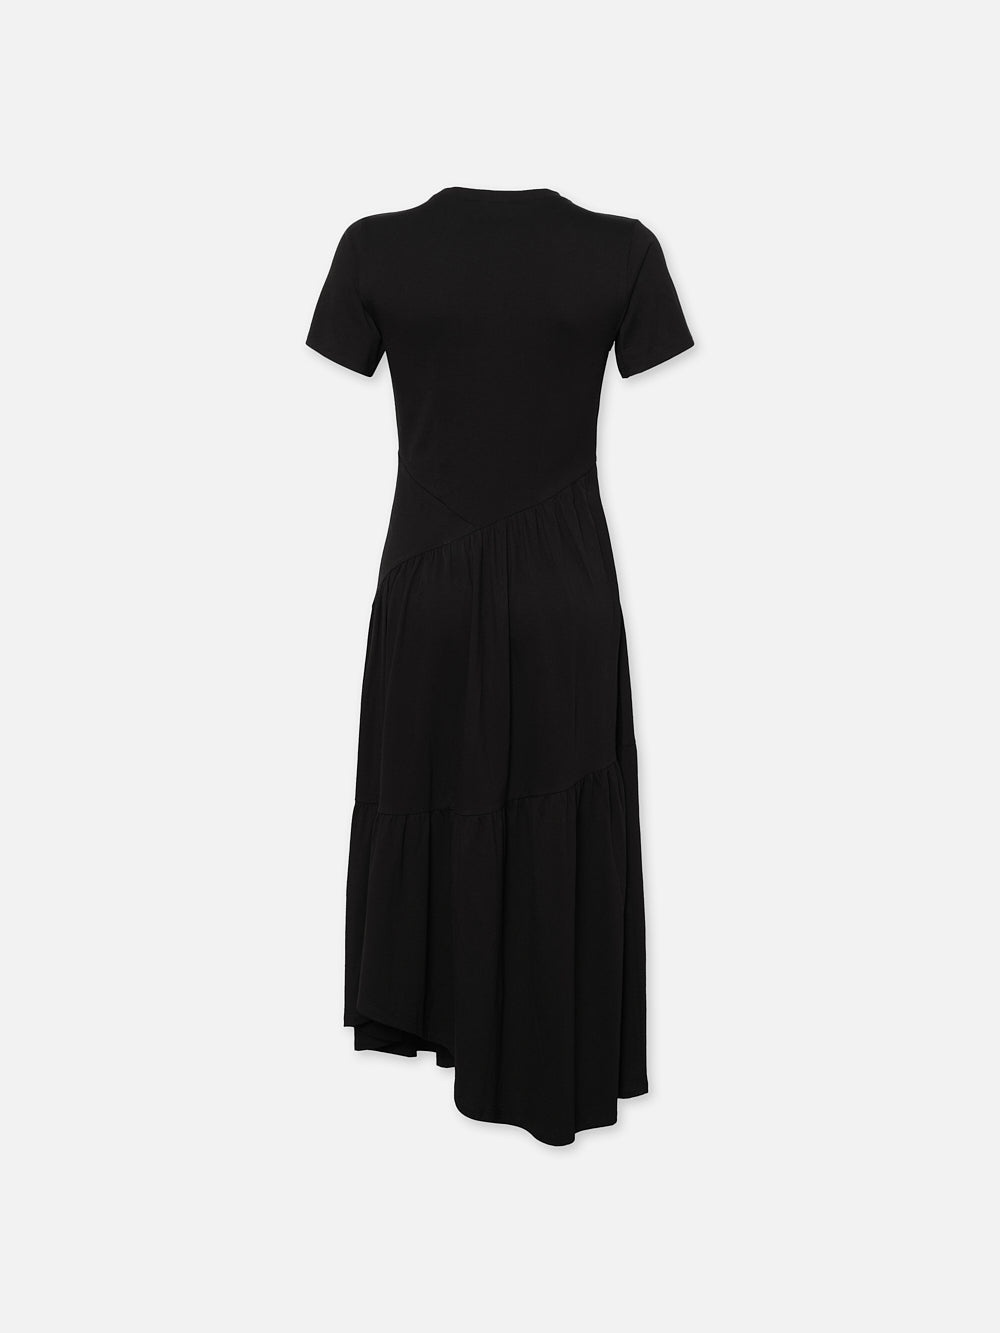 Gathered Seam Short Sleeve Dress in Black - 3